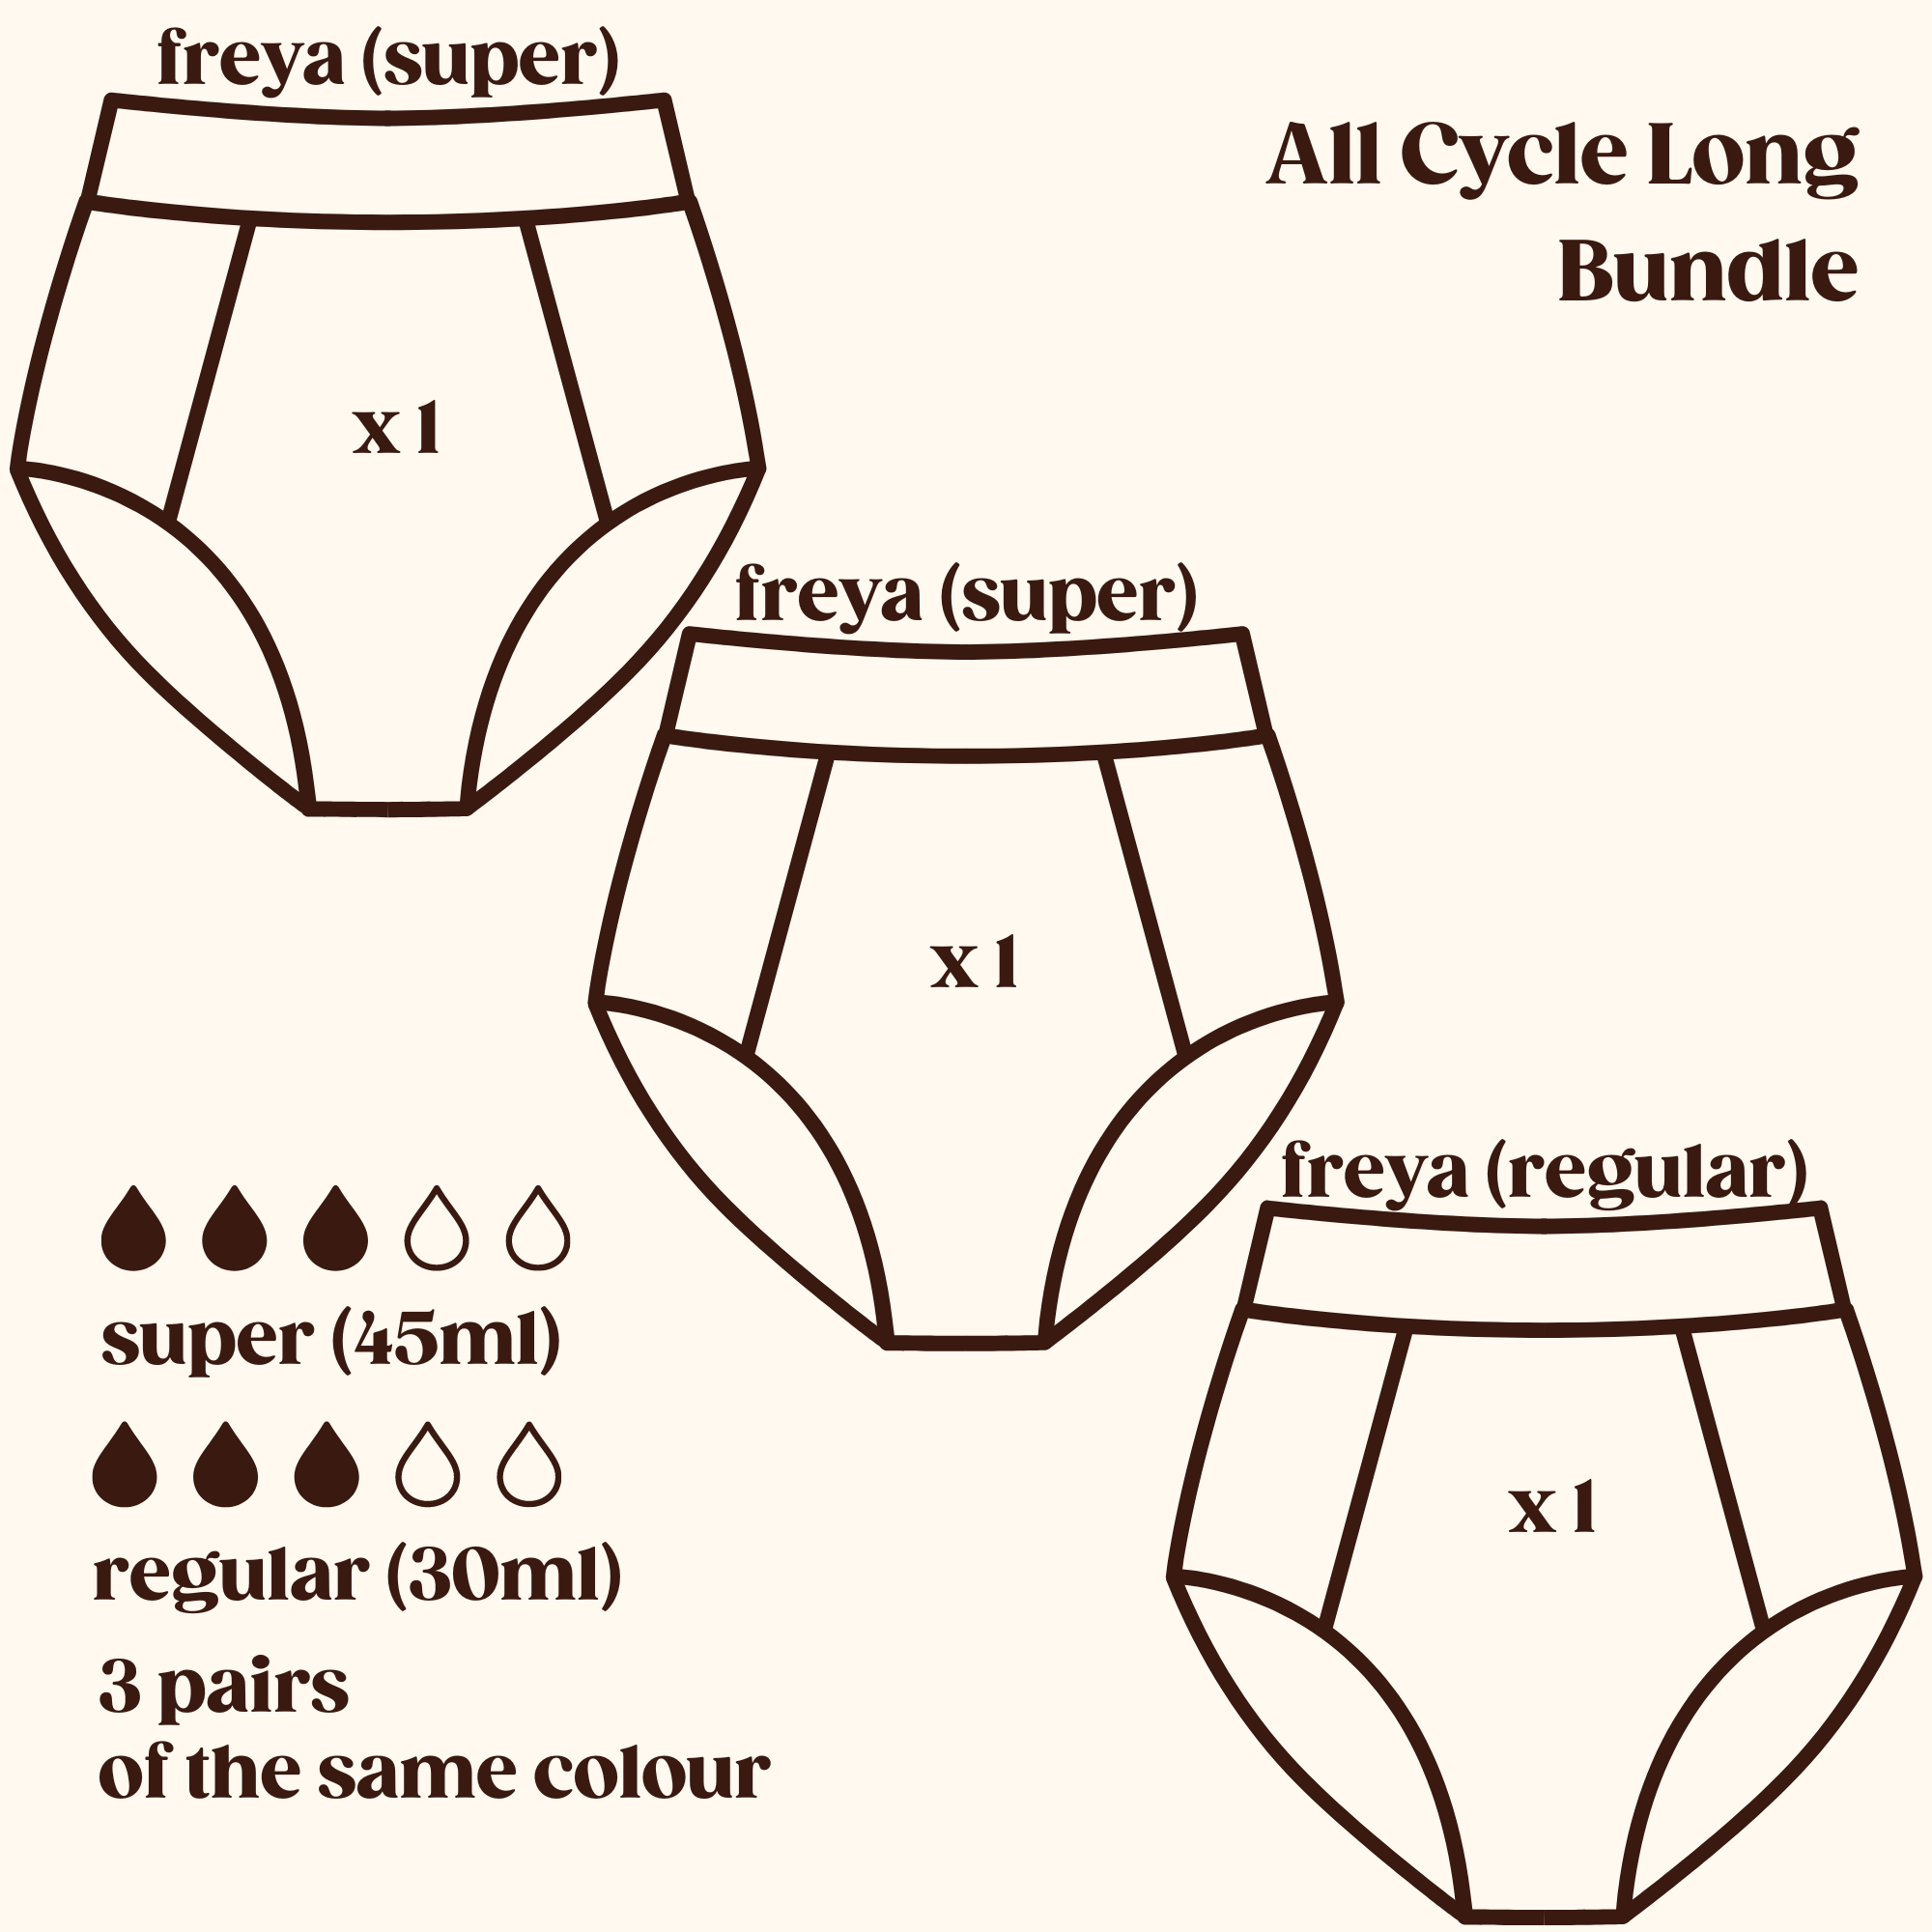 All Cycle Long Bundle (2 Super, 1 Regular Freya)